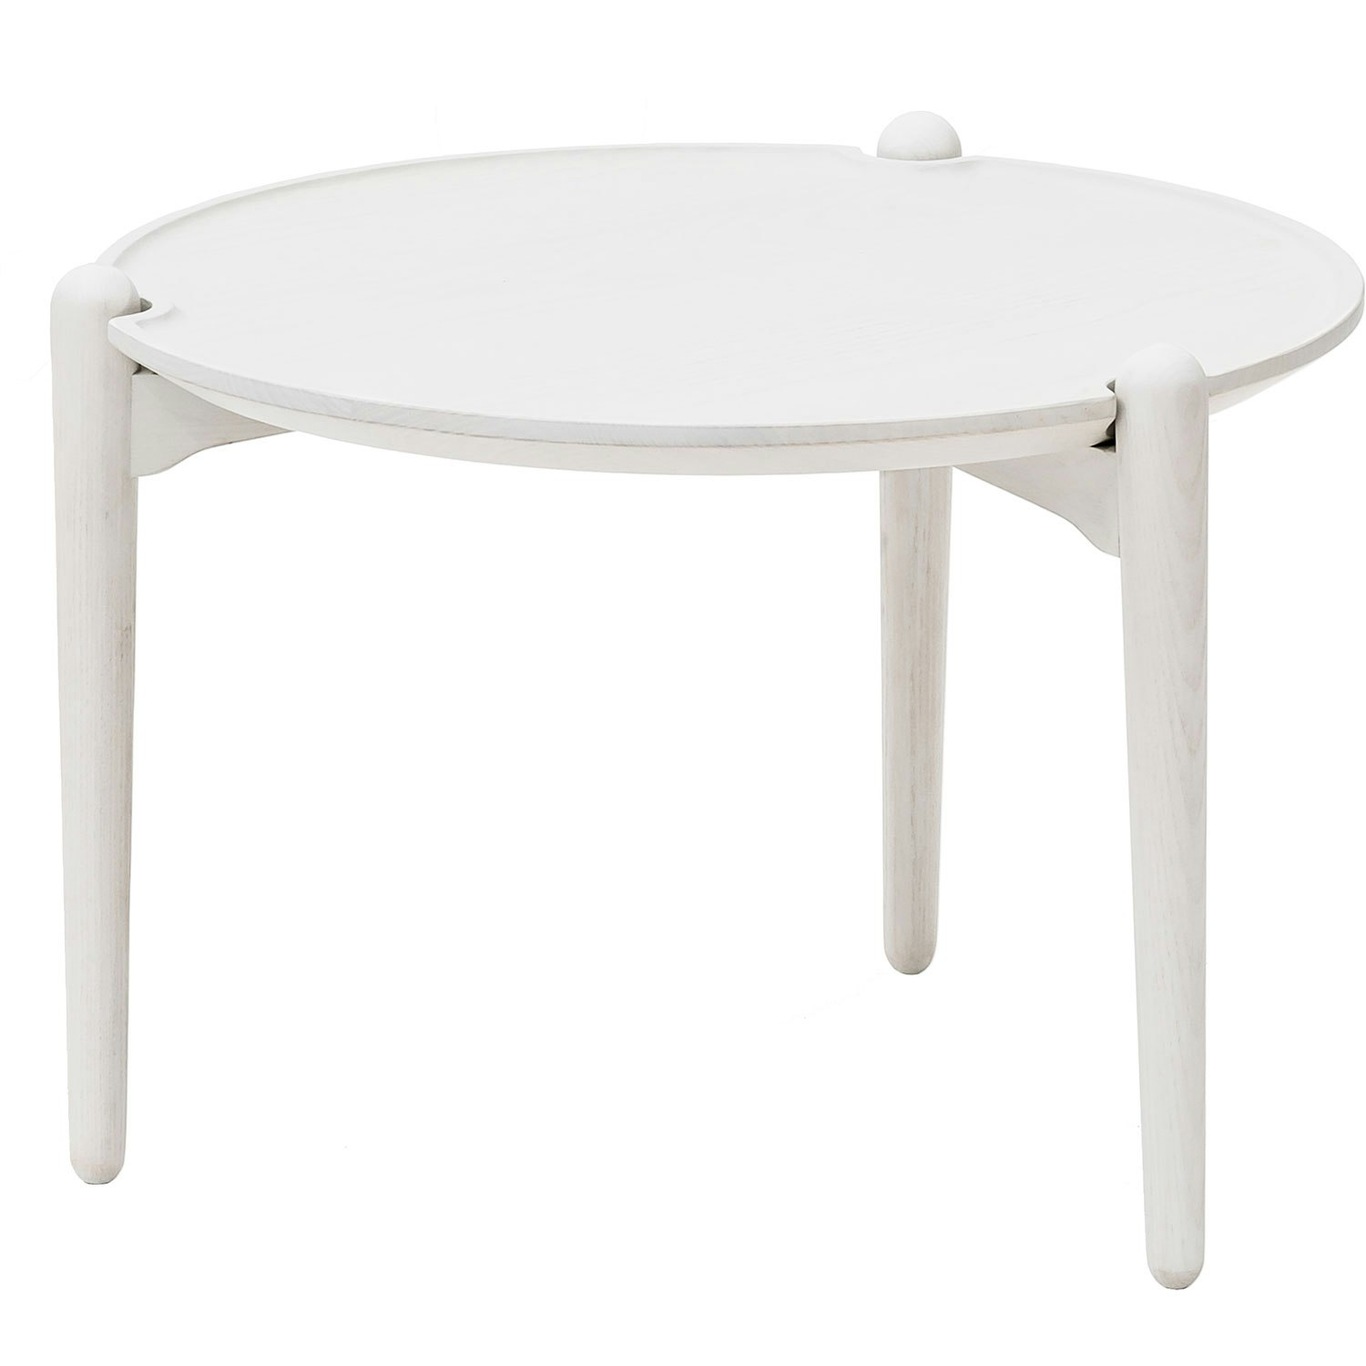 https://royaldesign.de/image/7/design-house-stockholm-aria-table-low-1?w=800&quality=80